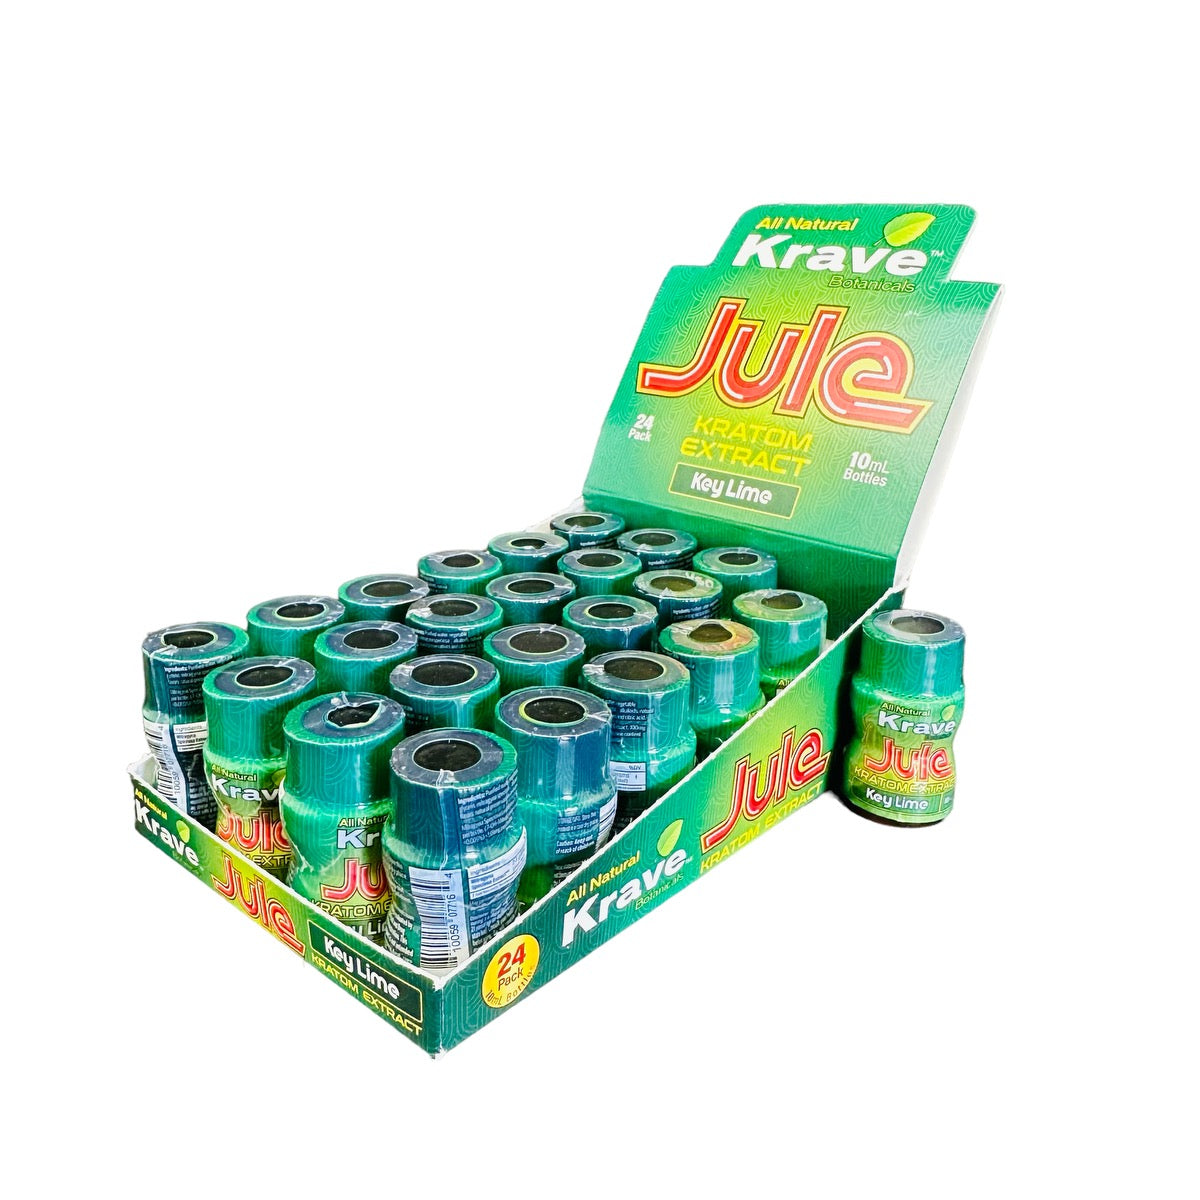 Krave Jule Kratom Shots 10ml (Flavor Options Available) - Box of 24 (B2B)